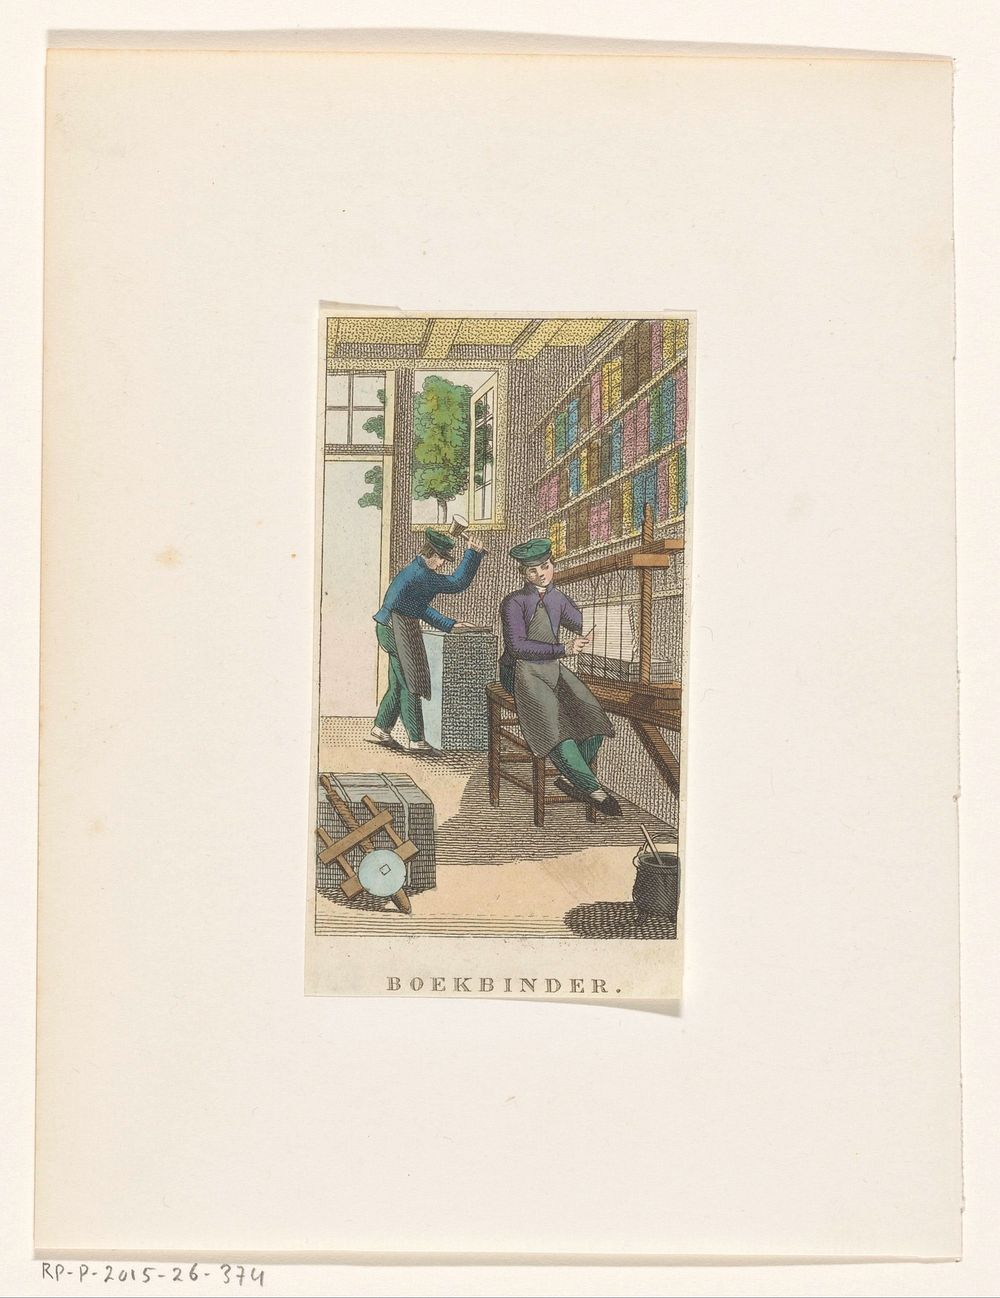 Boekbinder (c. 1800 - c. 1899) by anonymous